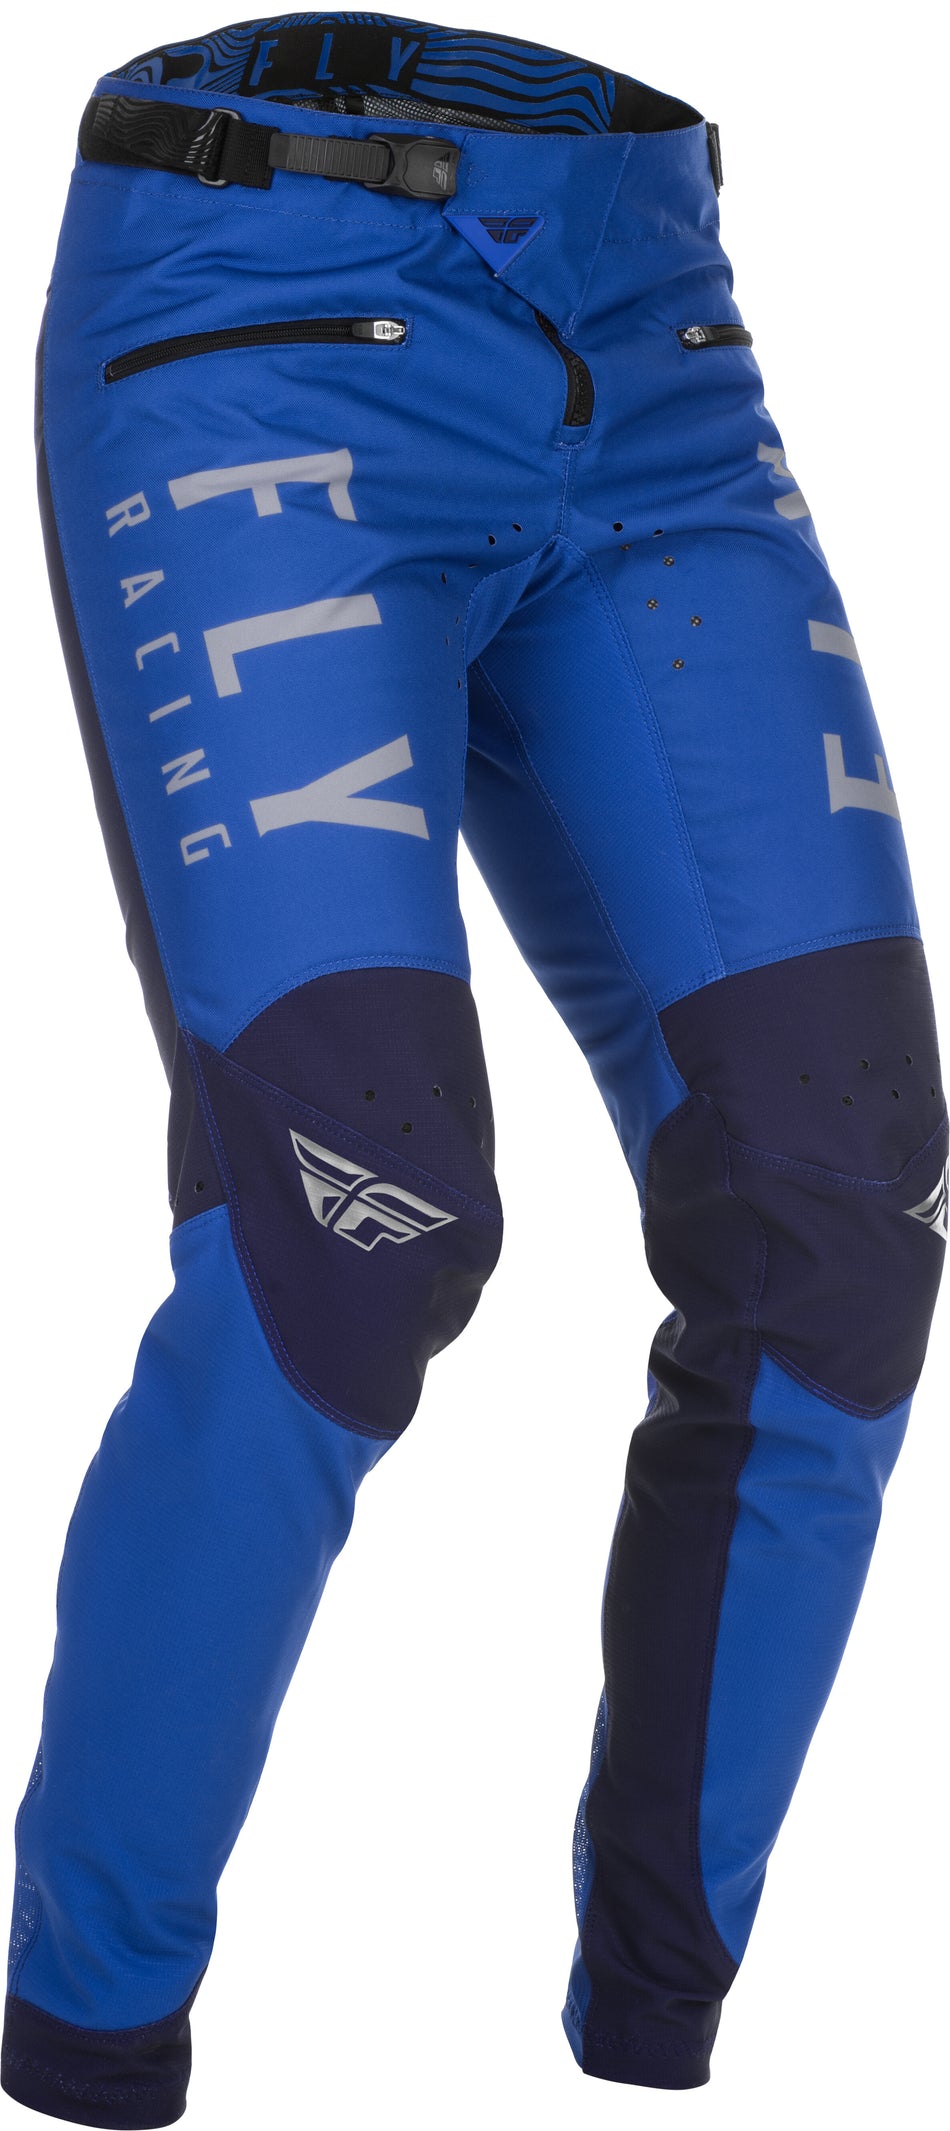 FLY RACING Youth Kinetic Bicycle Pants Blue Sz 20 374-04120